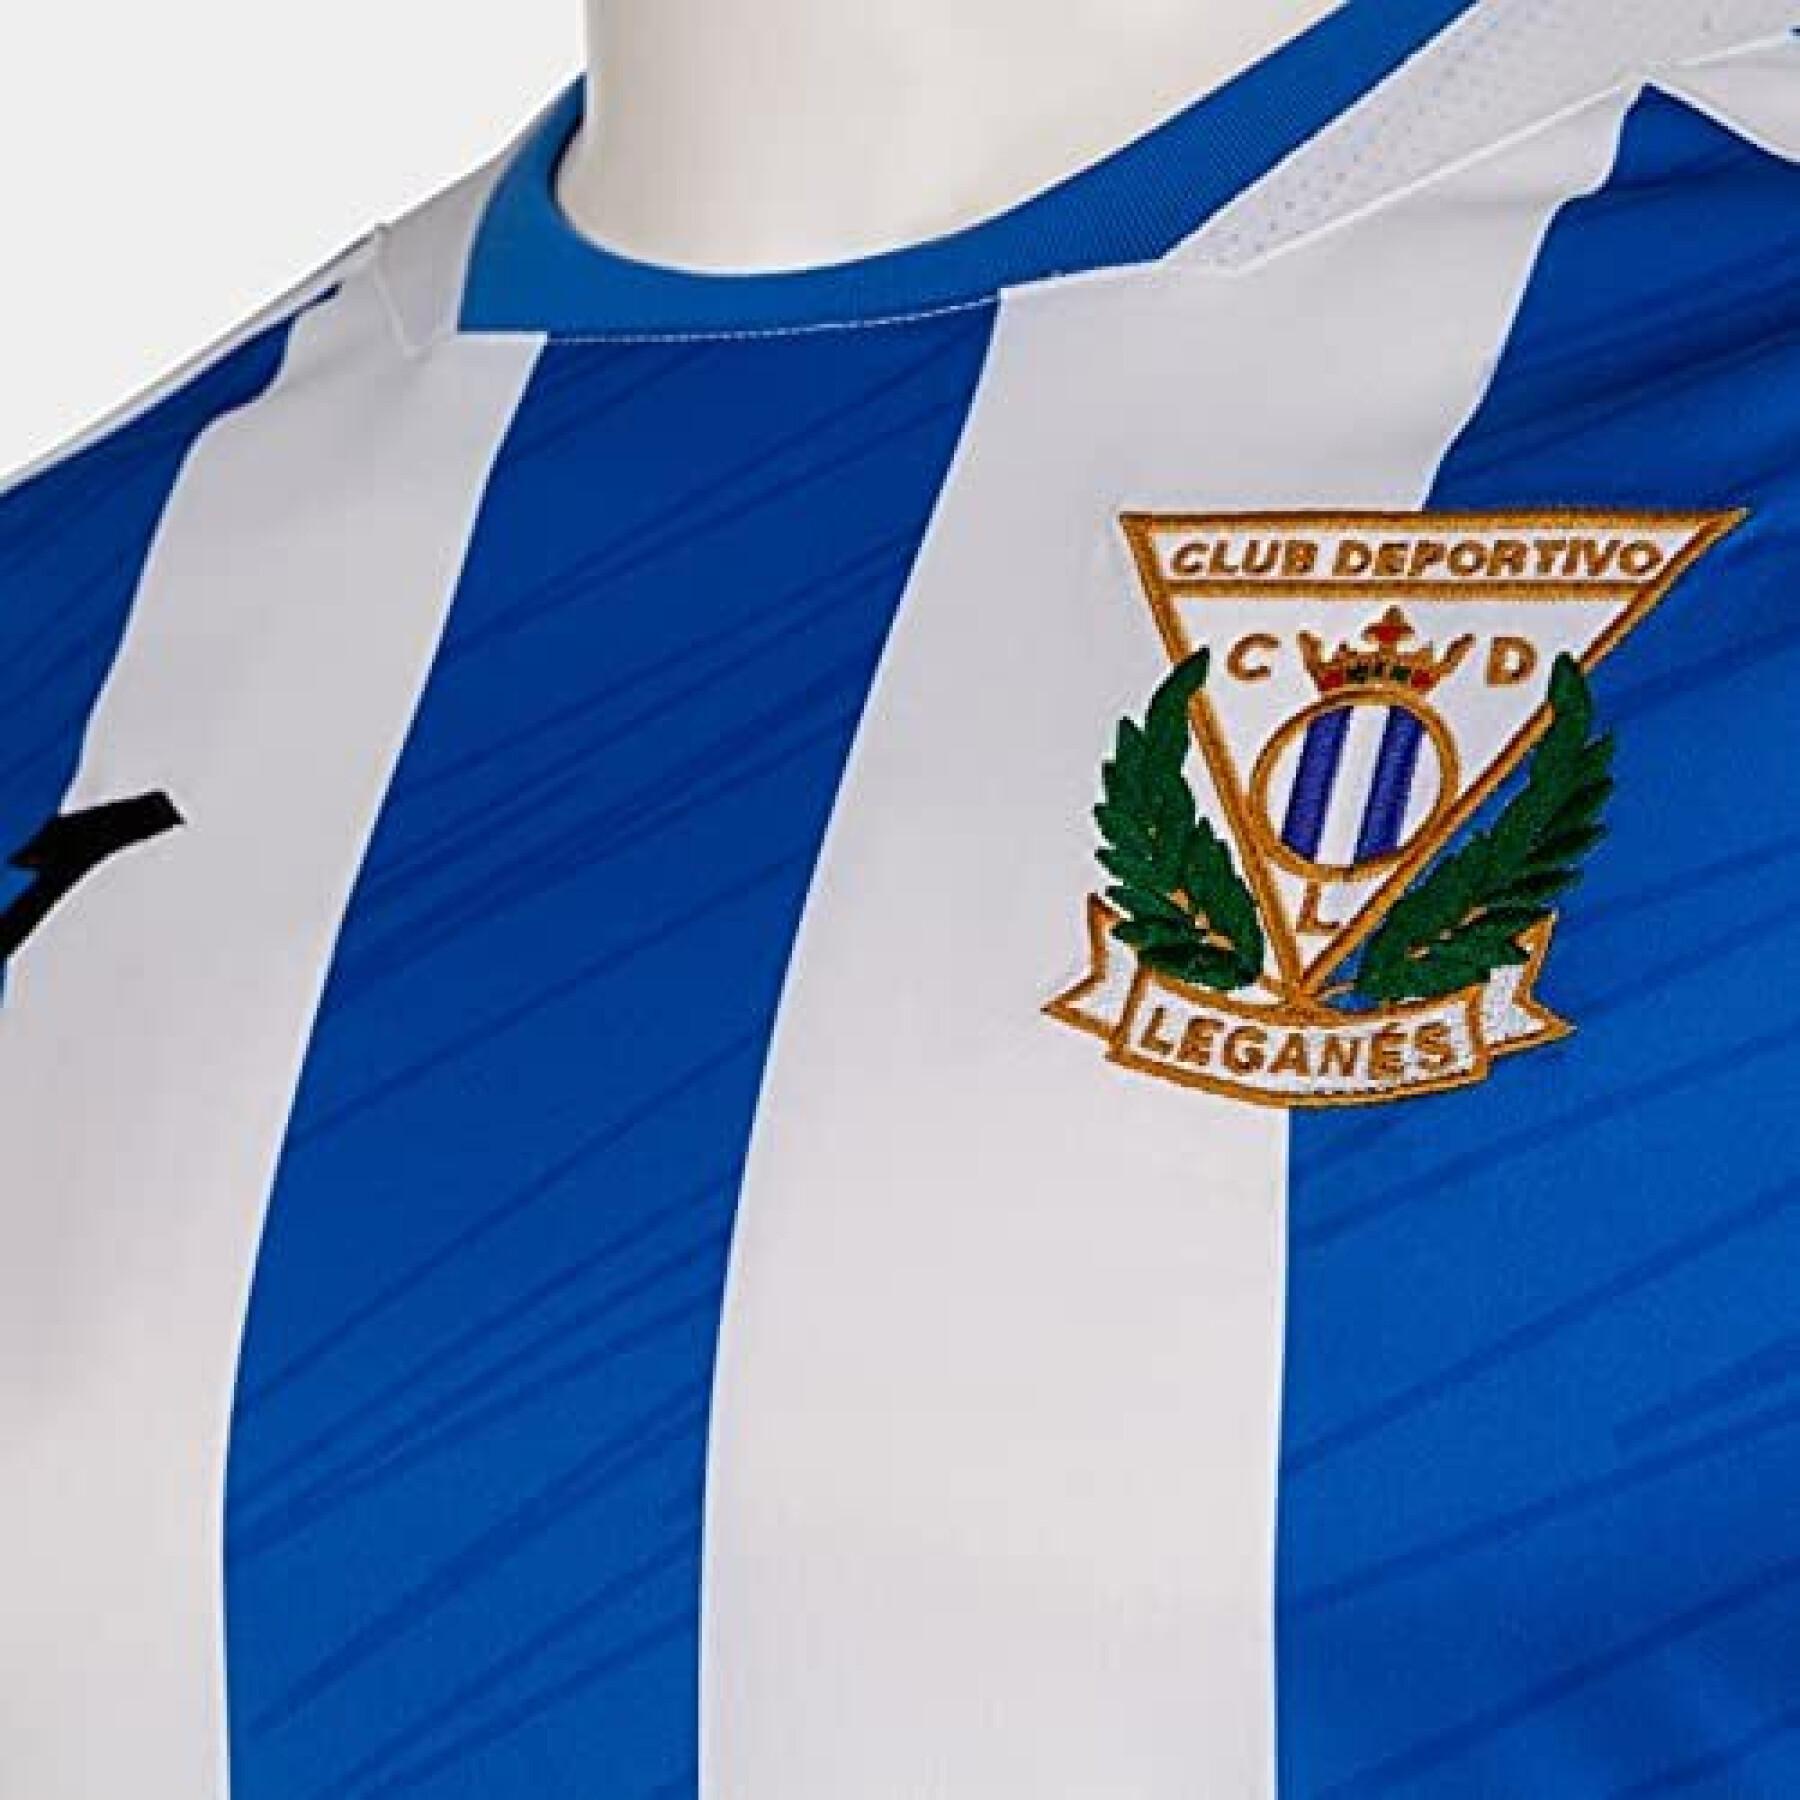 Home jersey Leganés 2021/22